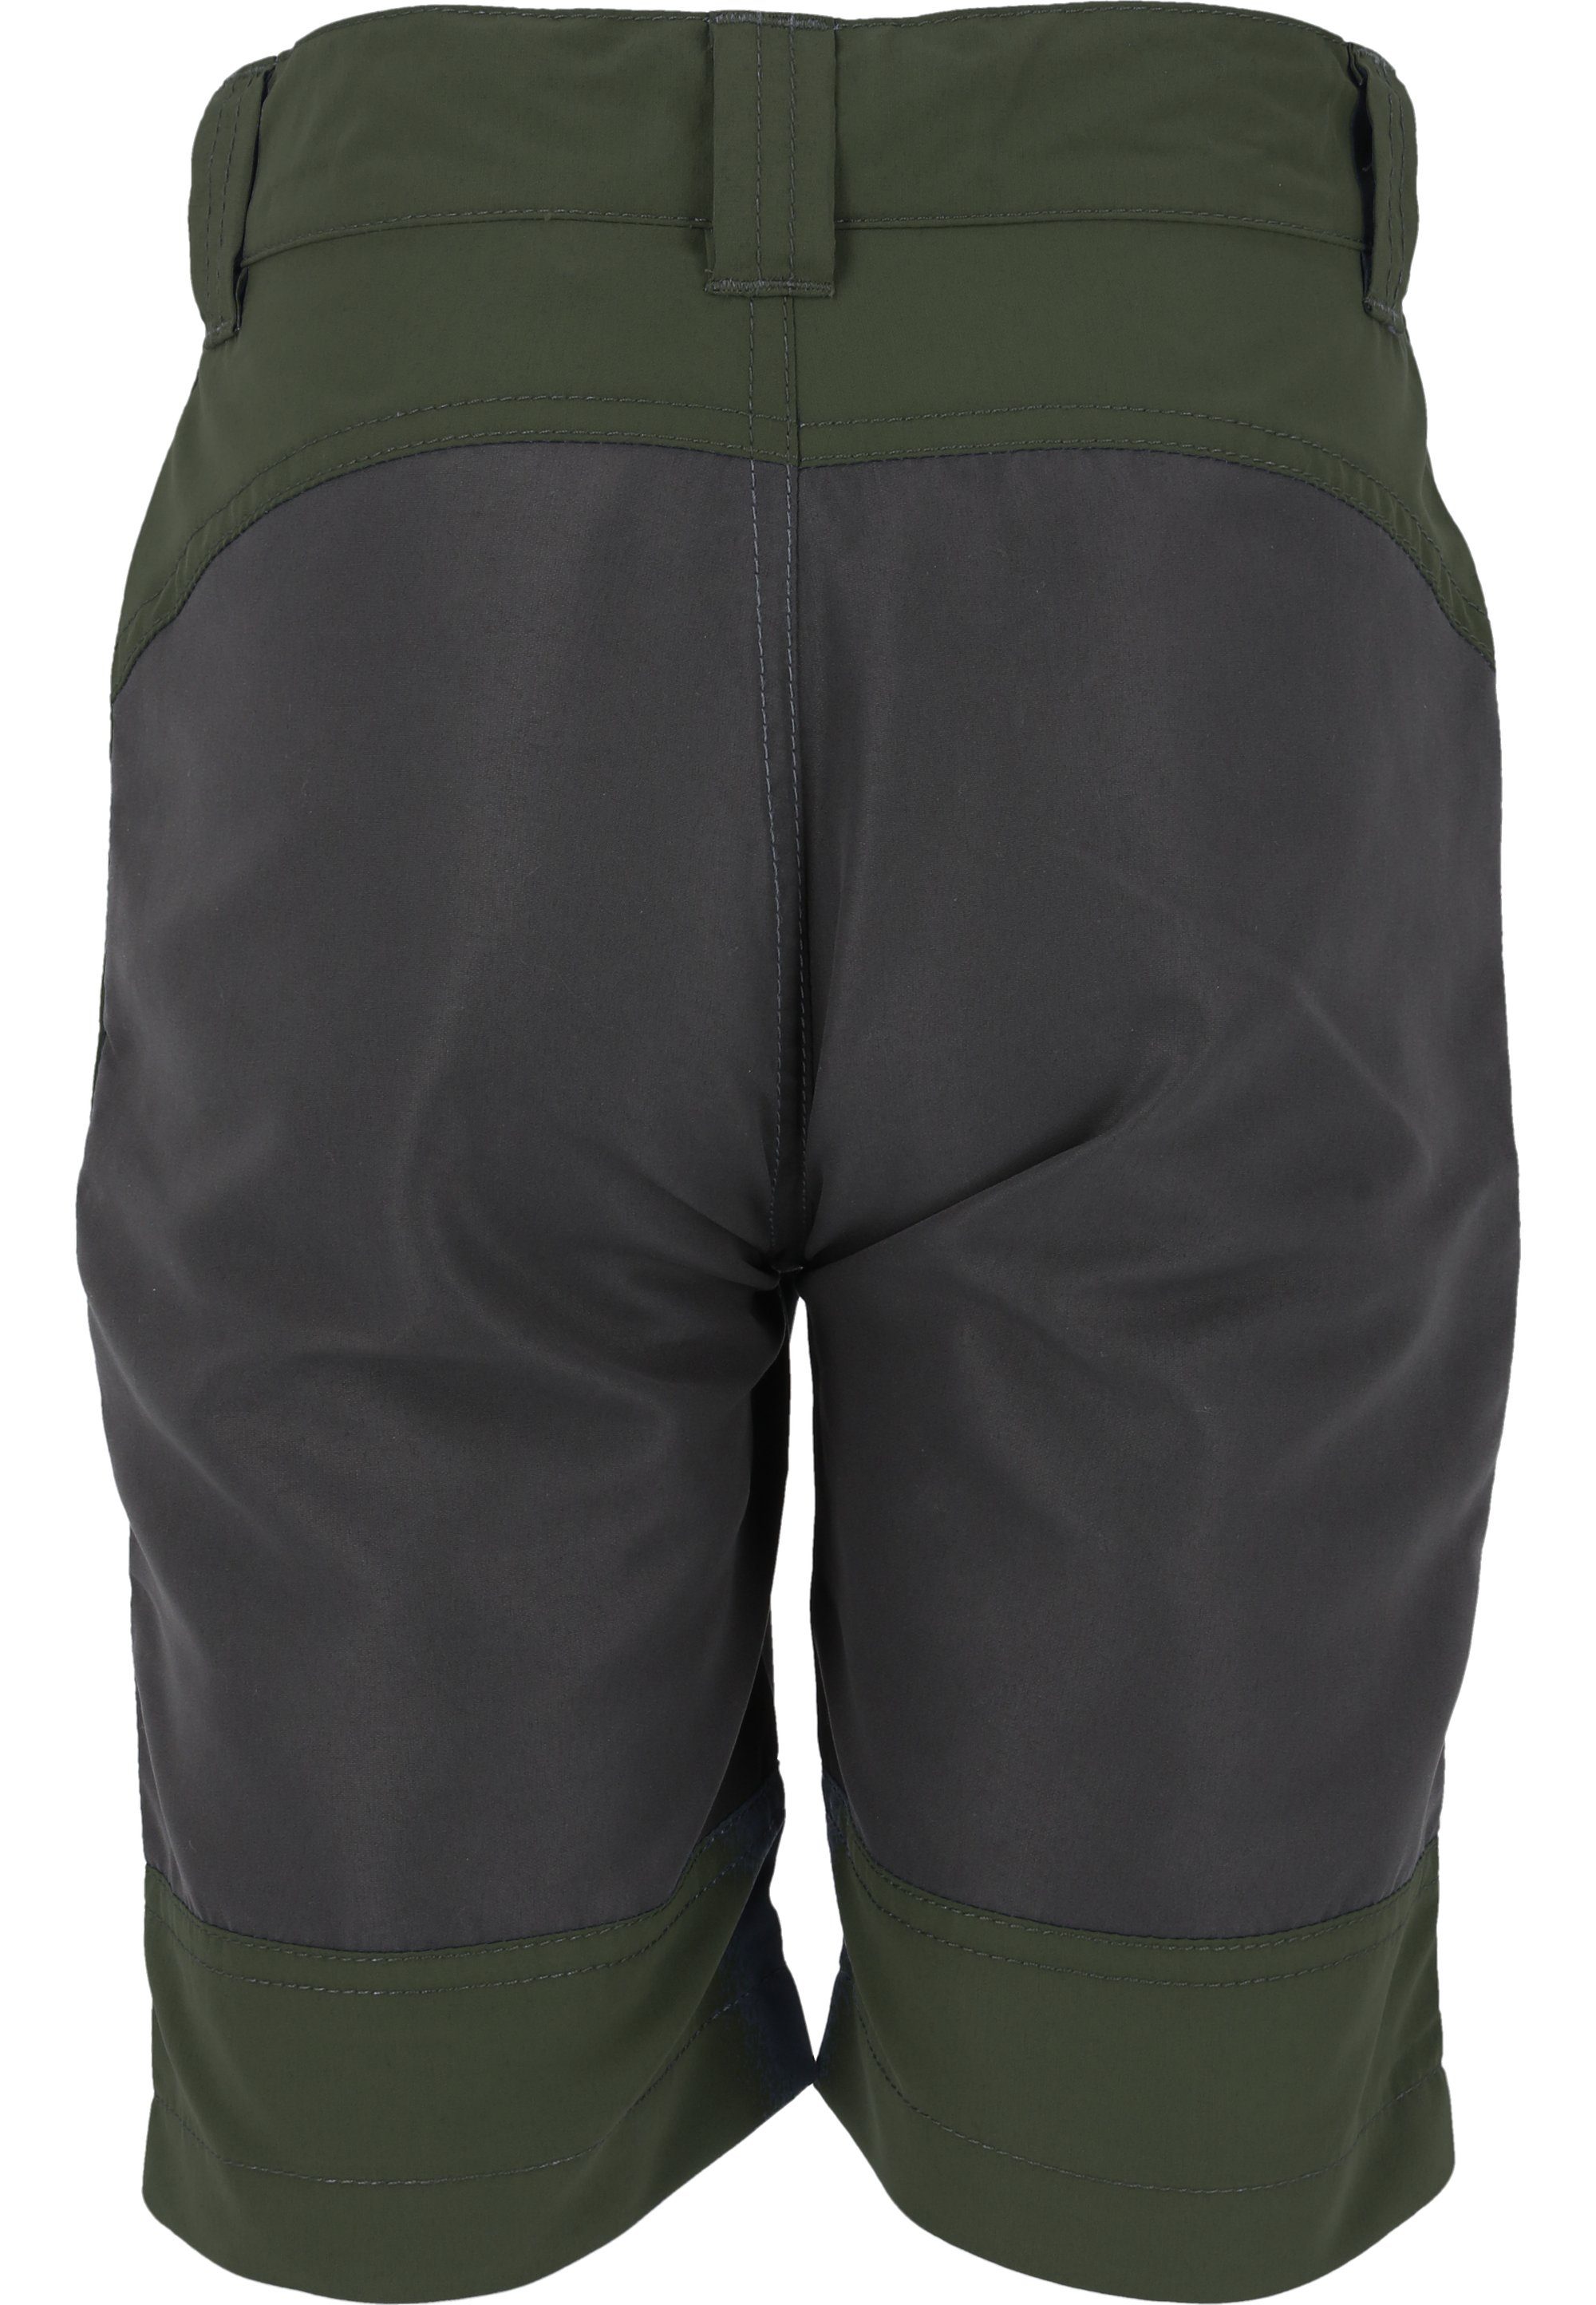 Atlantic Material aus olivgrün-schwarz robustem ZIGZAG Shorts